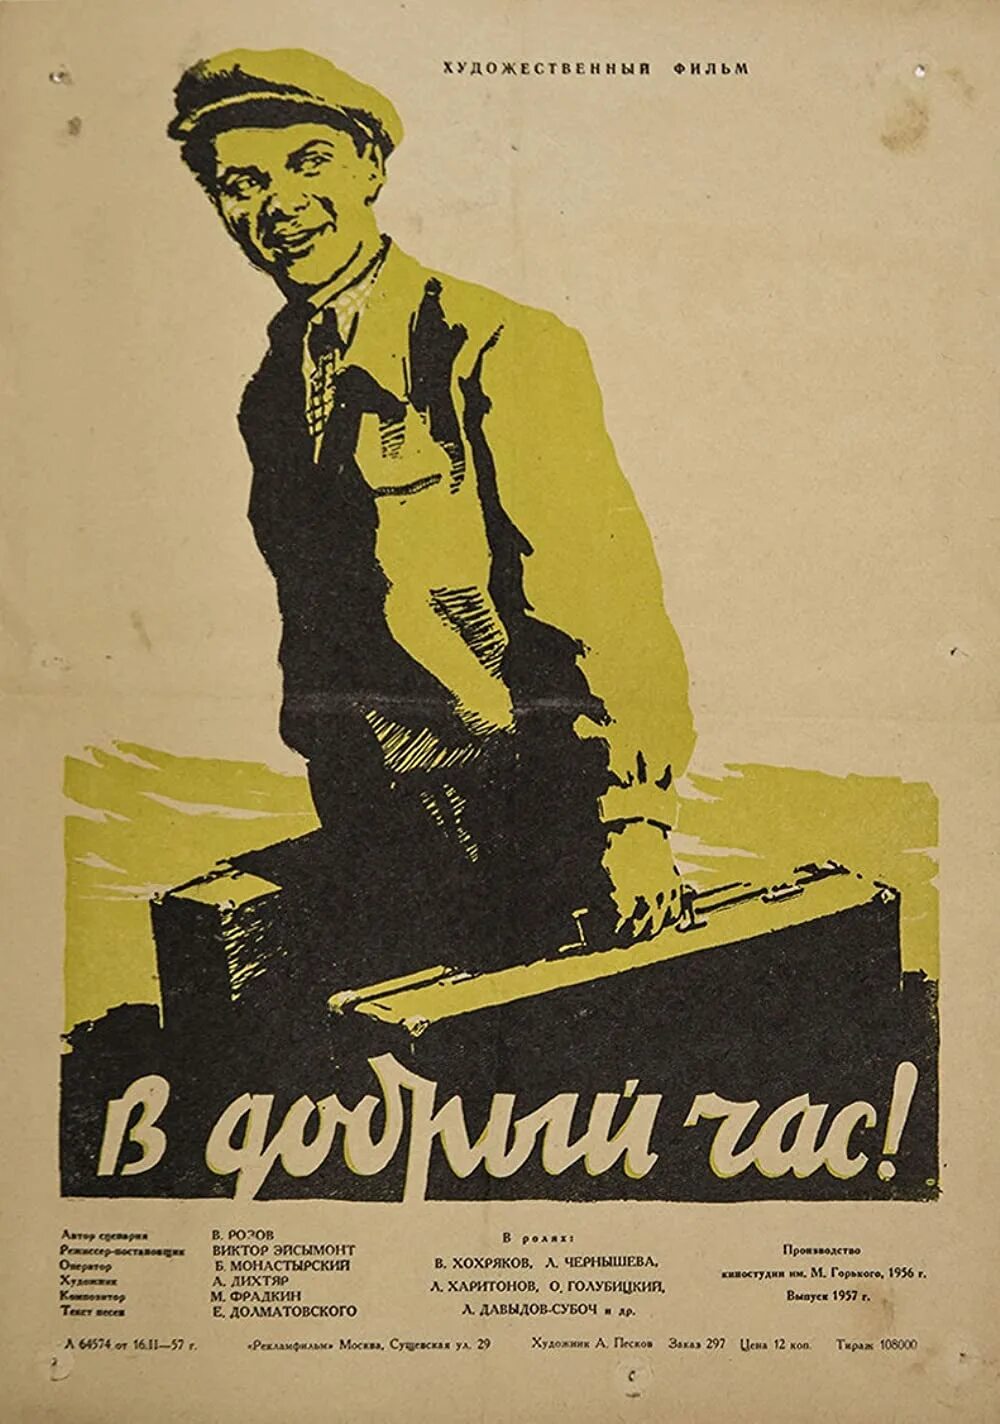 Произведения виктора розова. В добрый час! (1956) Постер.